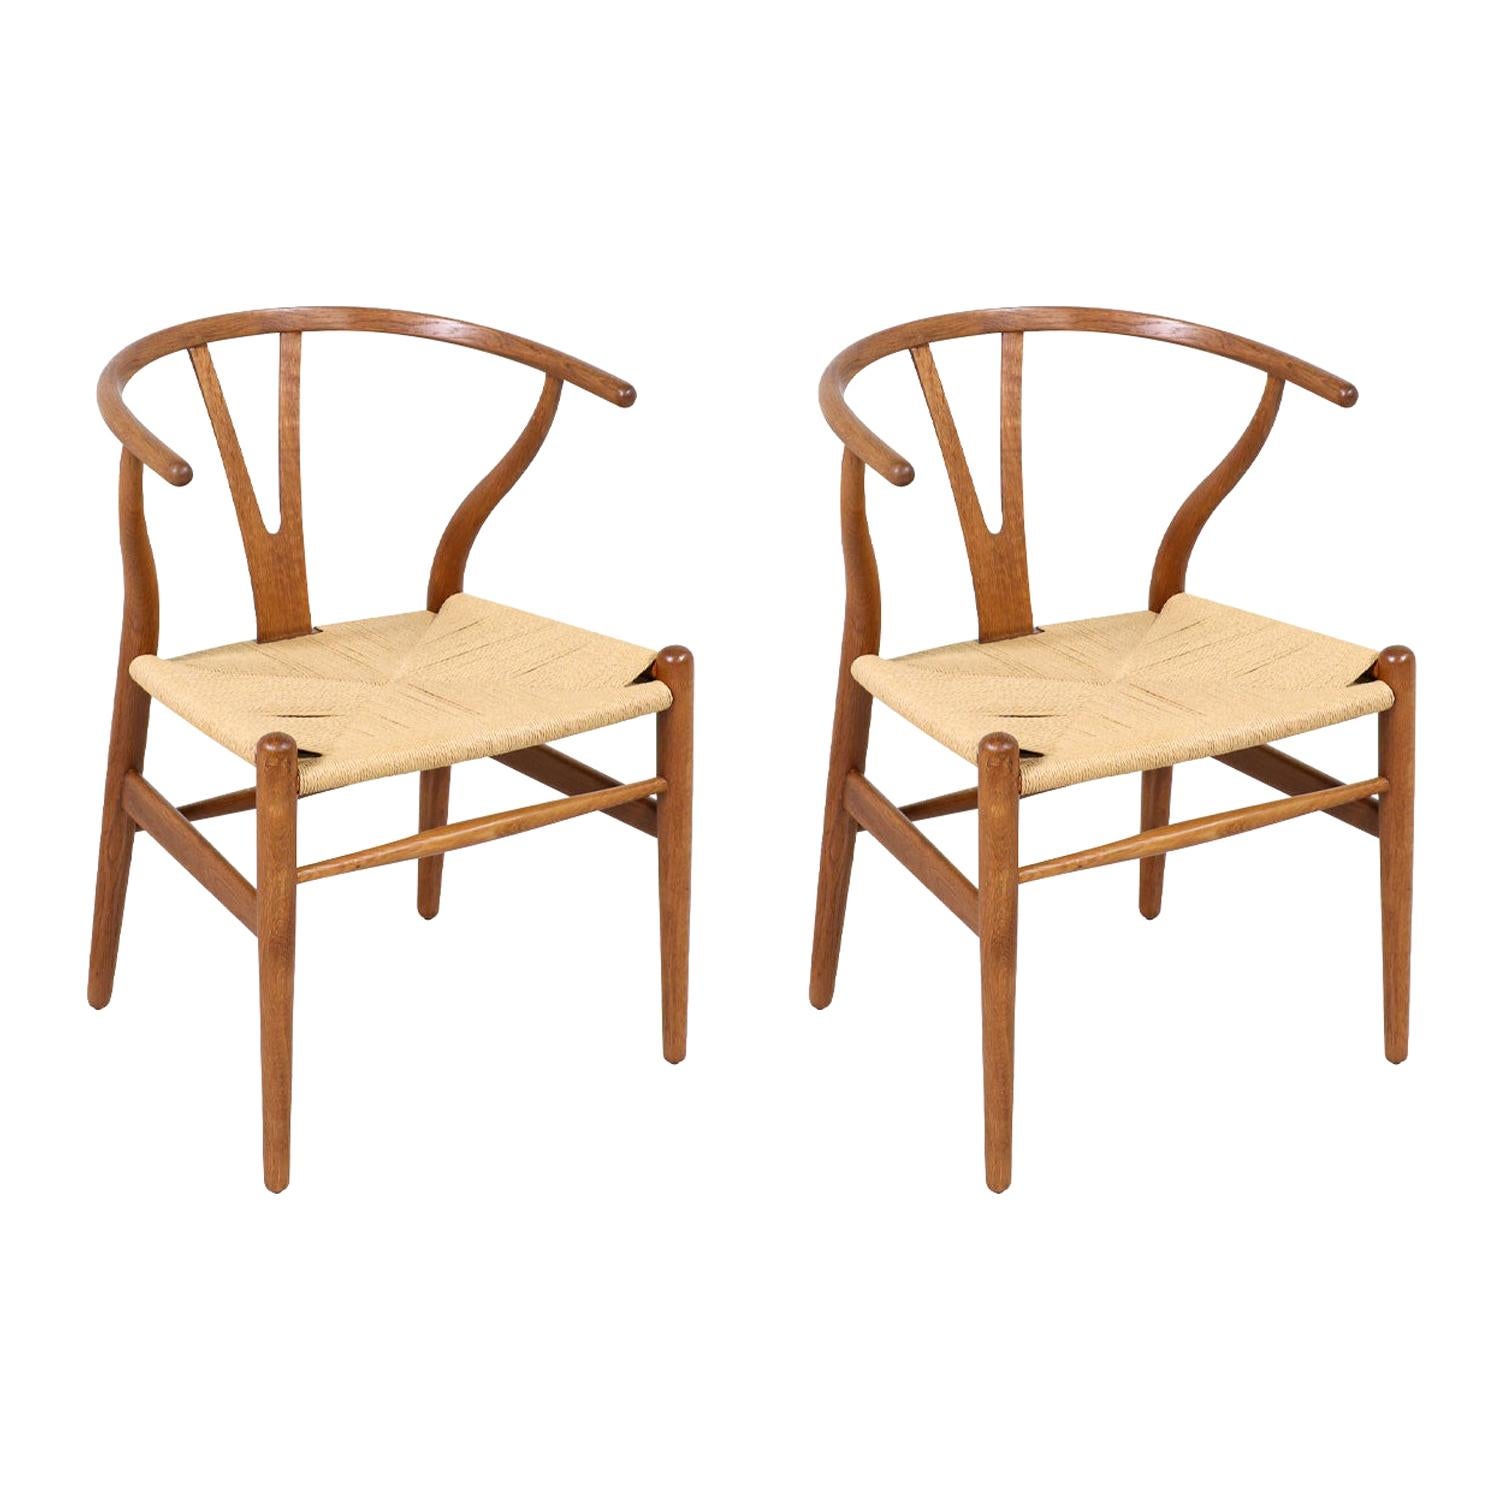 Hans J. Wegner "Wishbone" Oak Arm Chairs for Carl Hansen & Søn